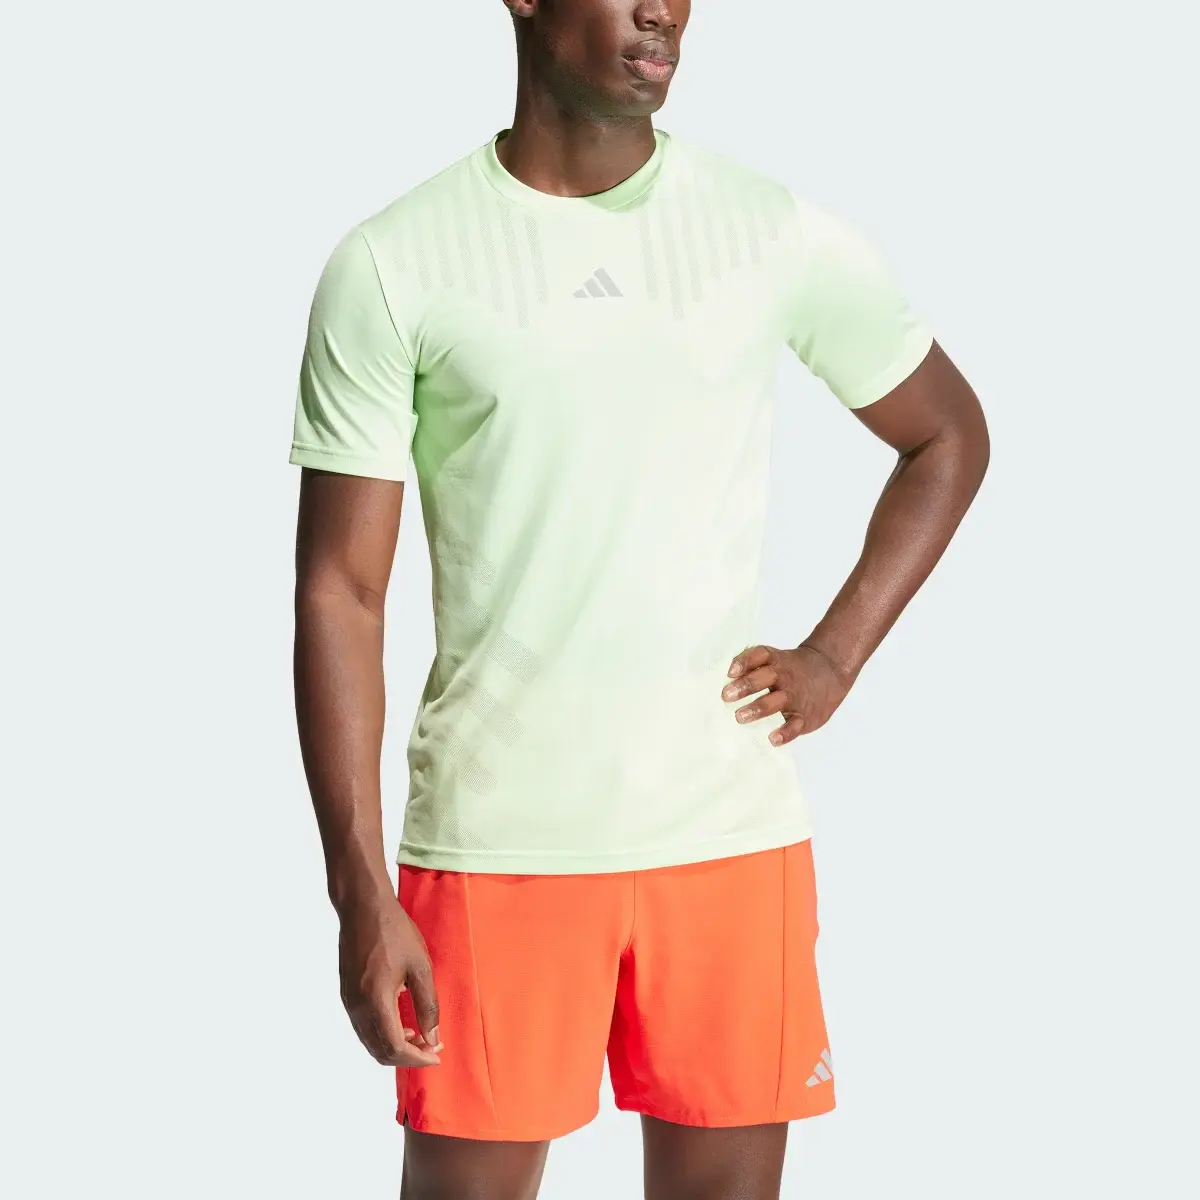 Adidas T-shirt HIIT Airchill Workout. 1